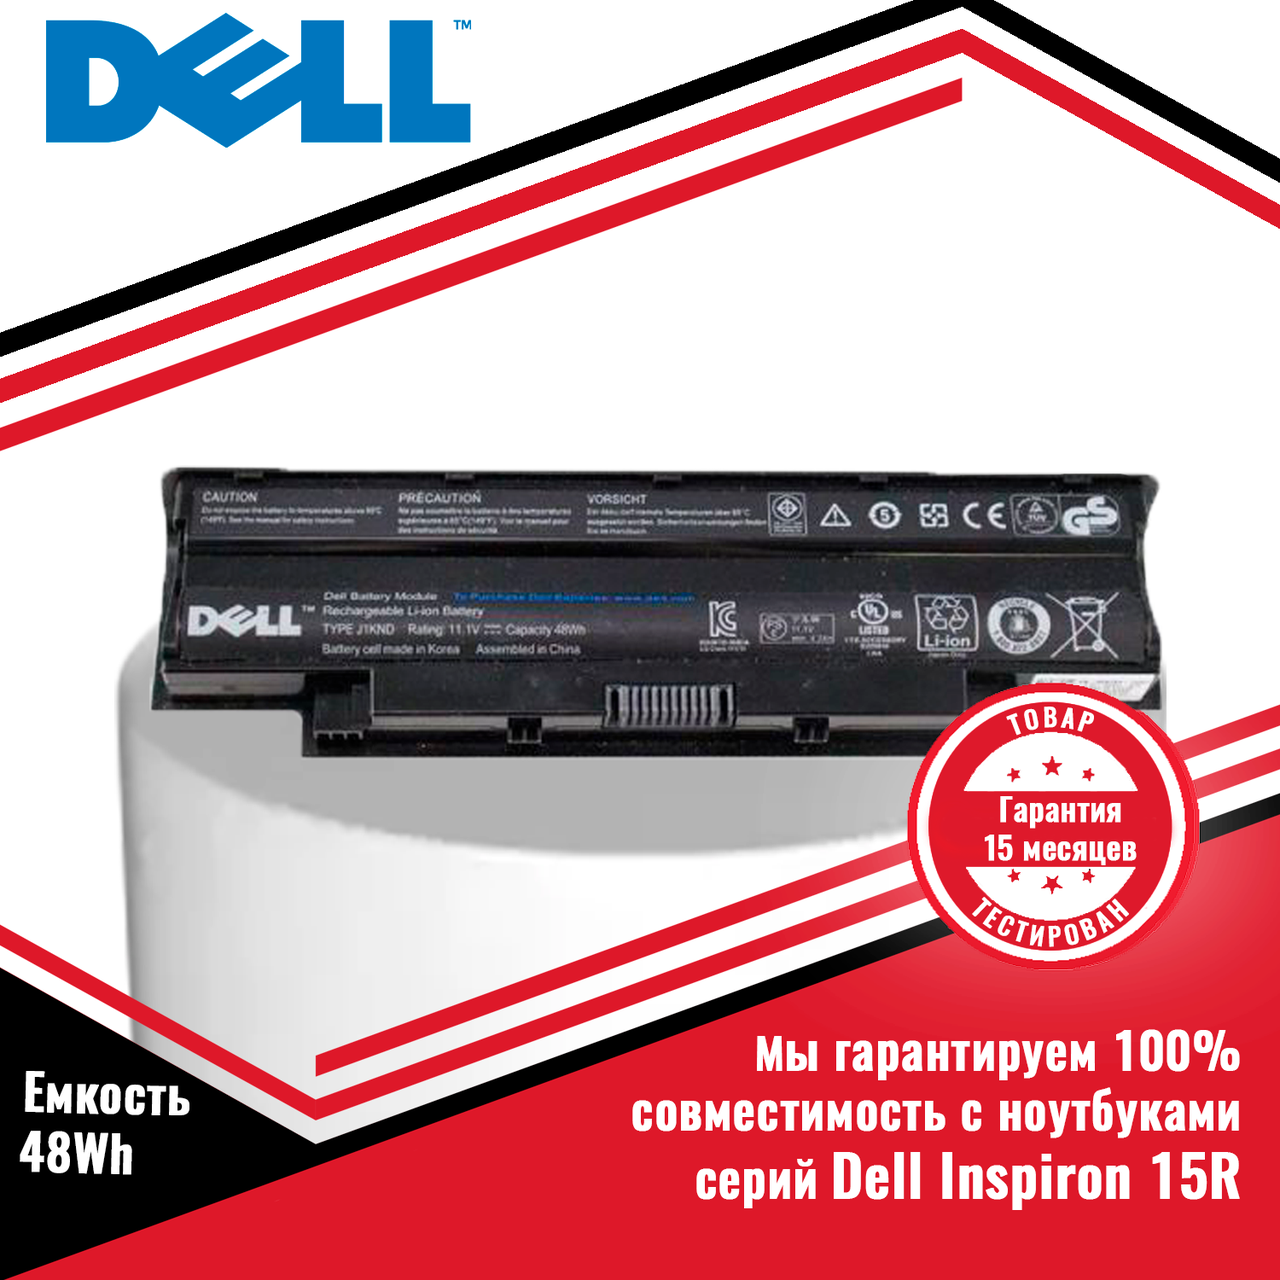 Оригинальный аккумулятор (батарея) для ноутбуков Dell Inspiron 15R серий: 15R 5010, N5010 (J1KND) 11.1V 48Wh